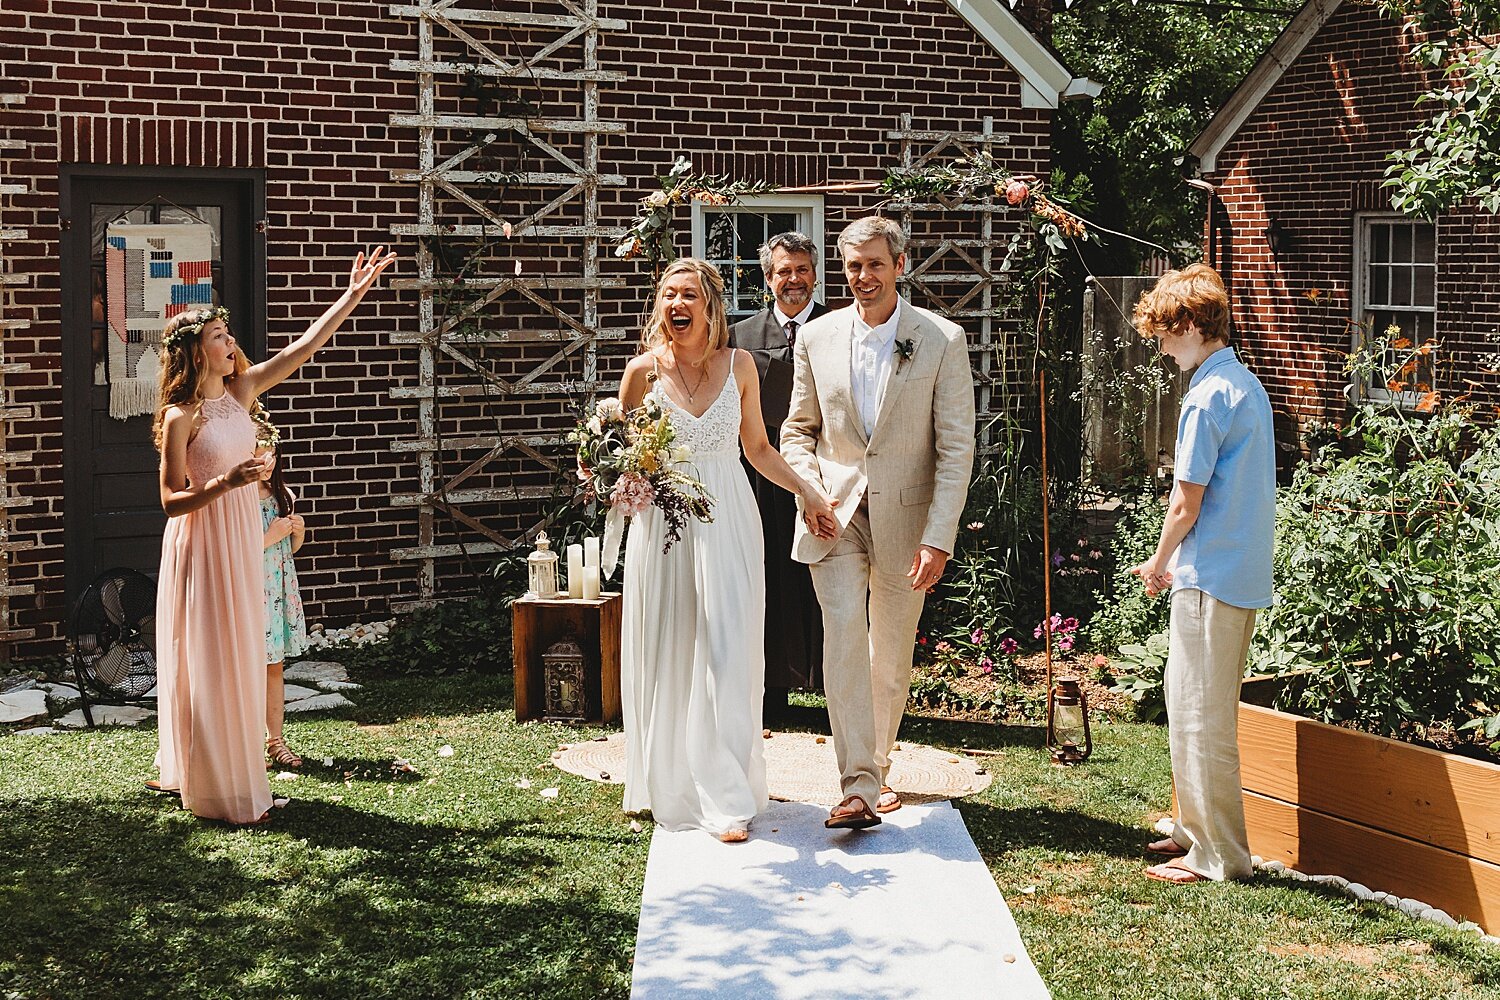 Wyomissing Berks County Pennsylvania intimate summer backyard Covid wedding photographer